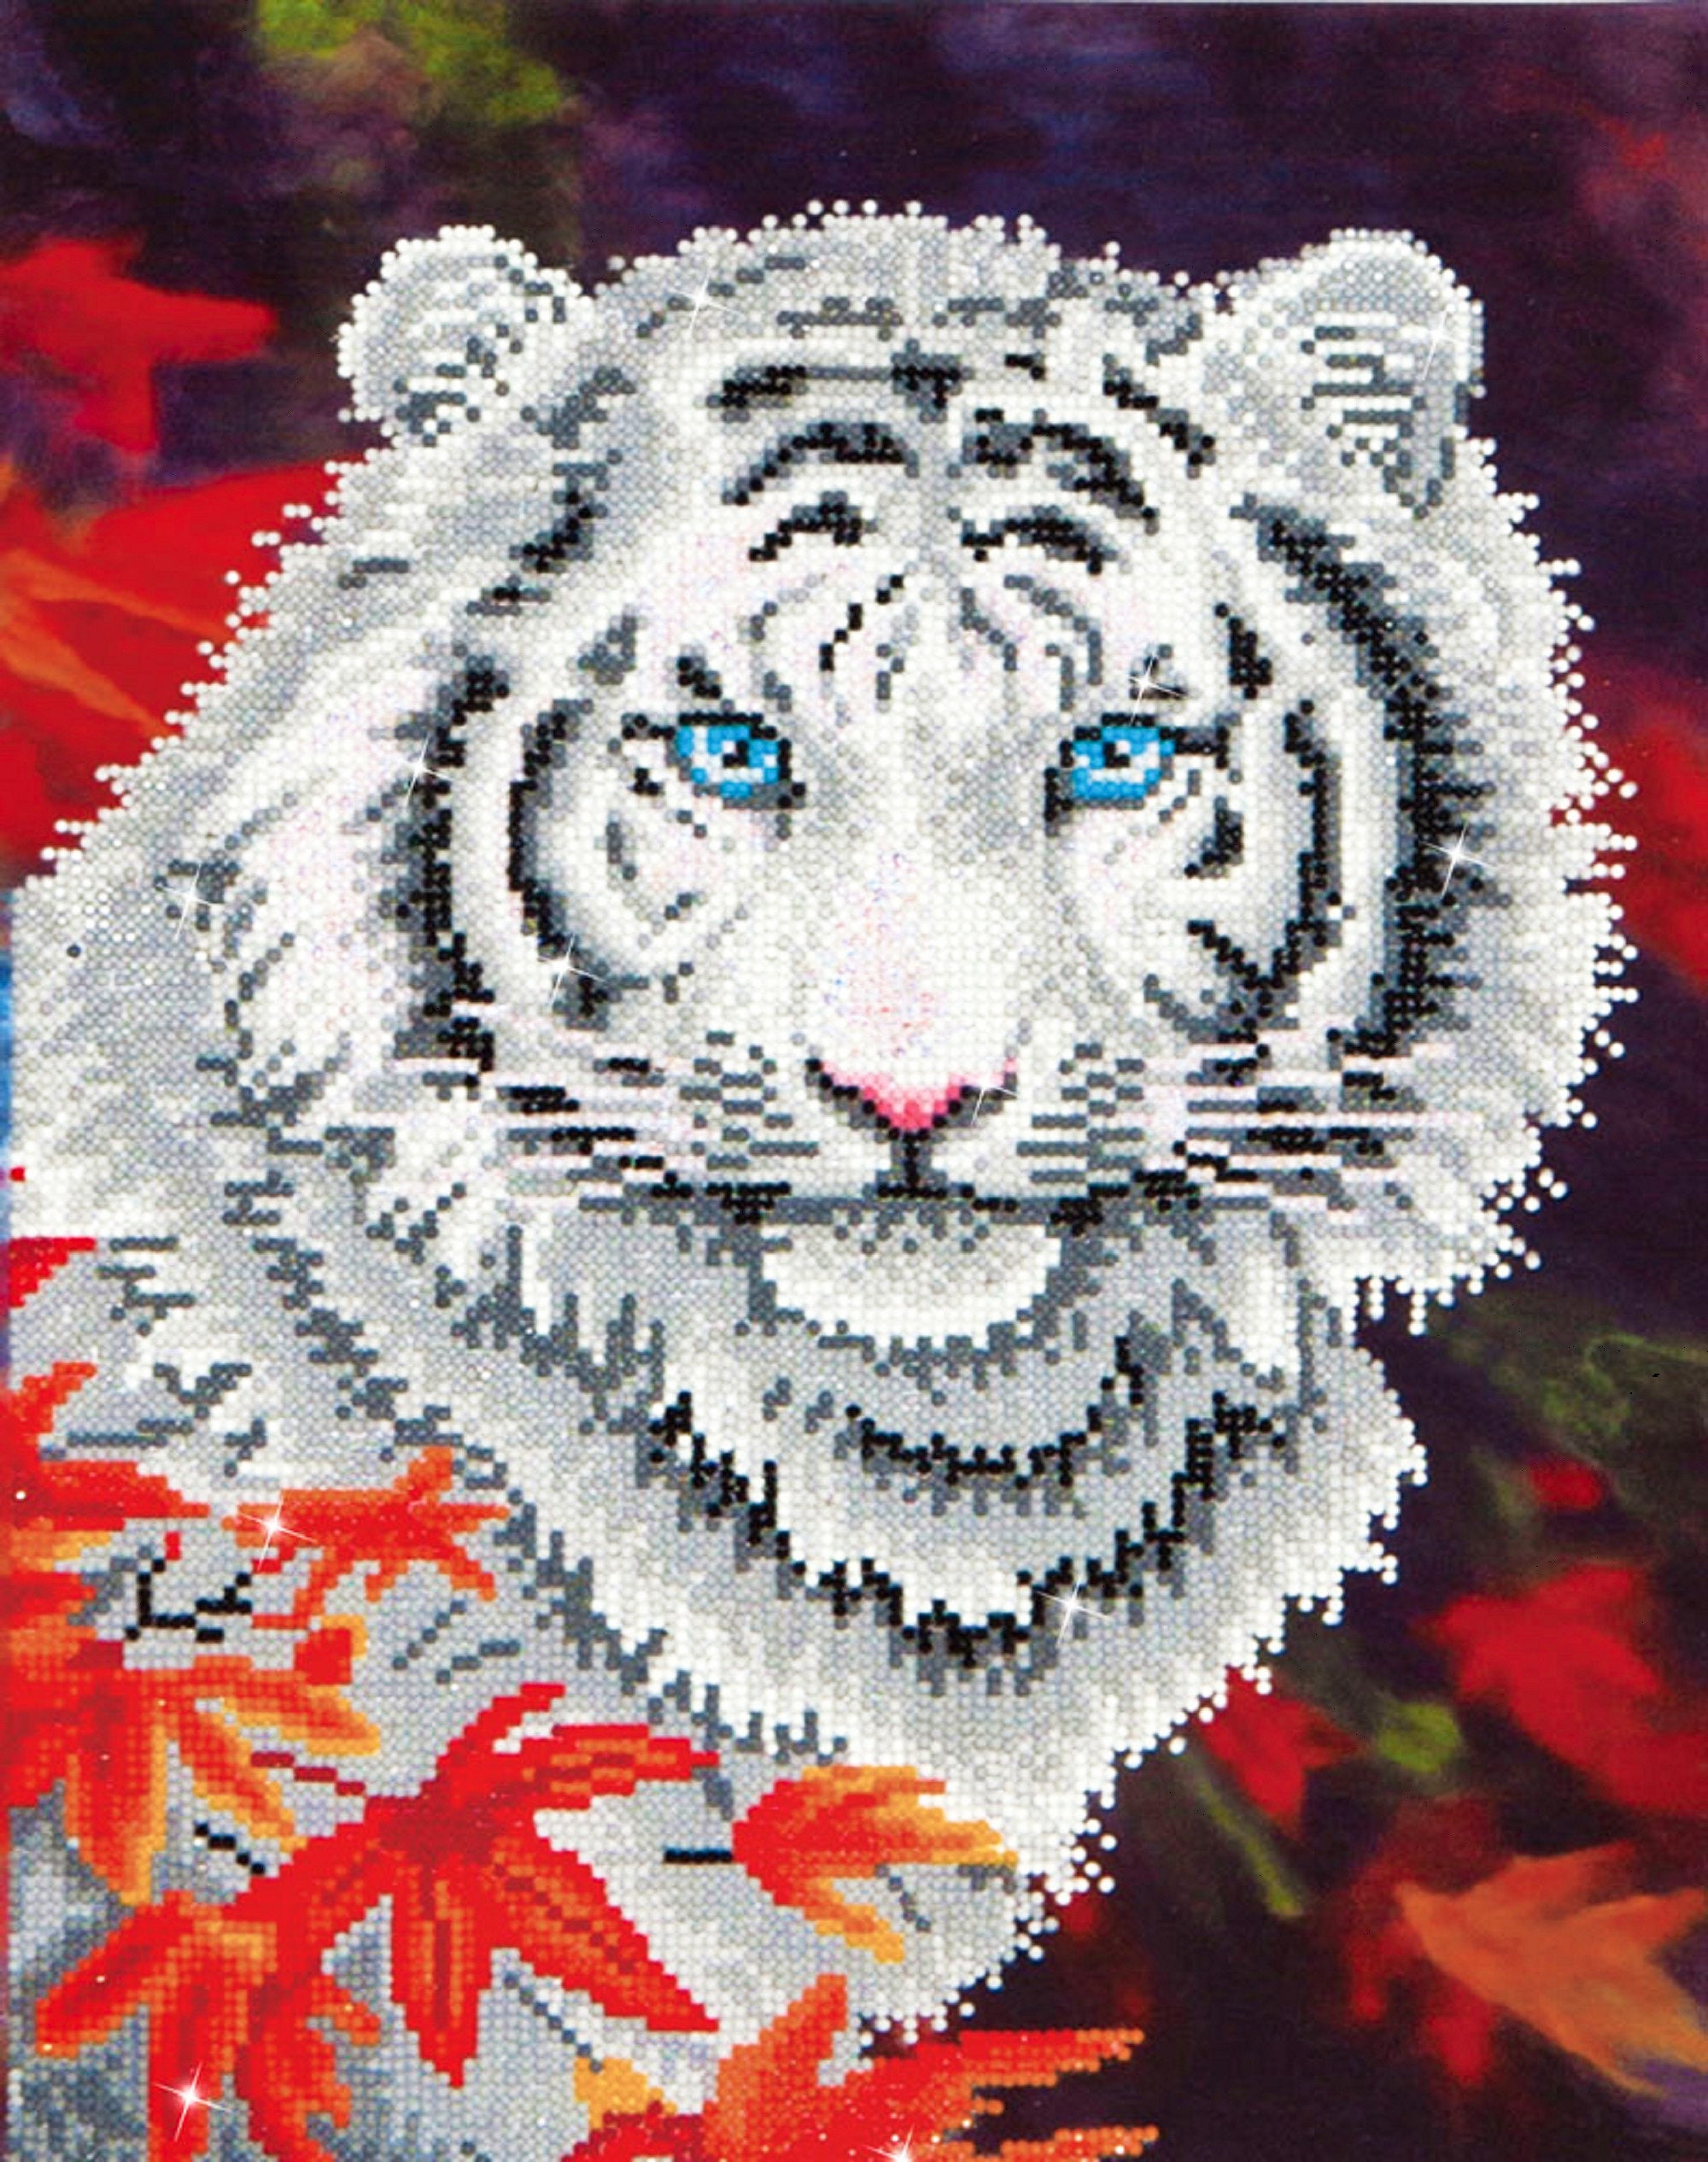 Diamond Dotz Diamond Painting Kit White Tiger & Cubs Design 